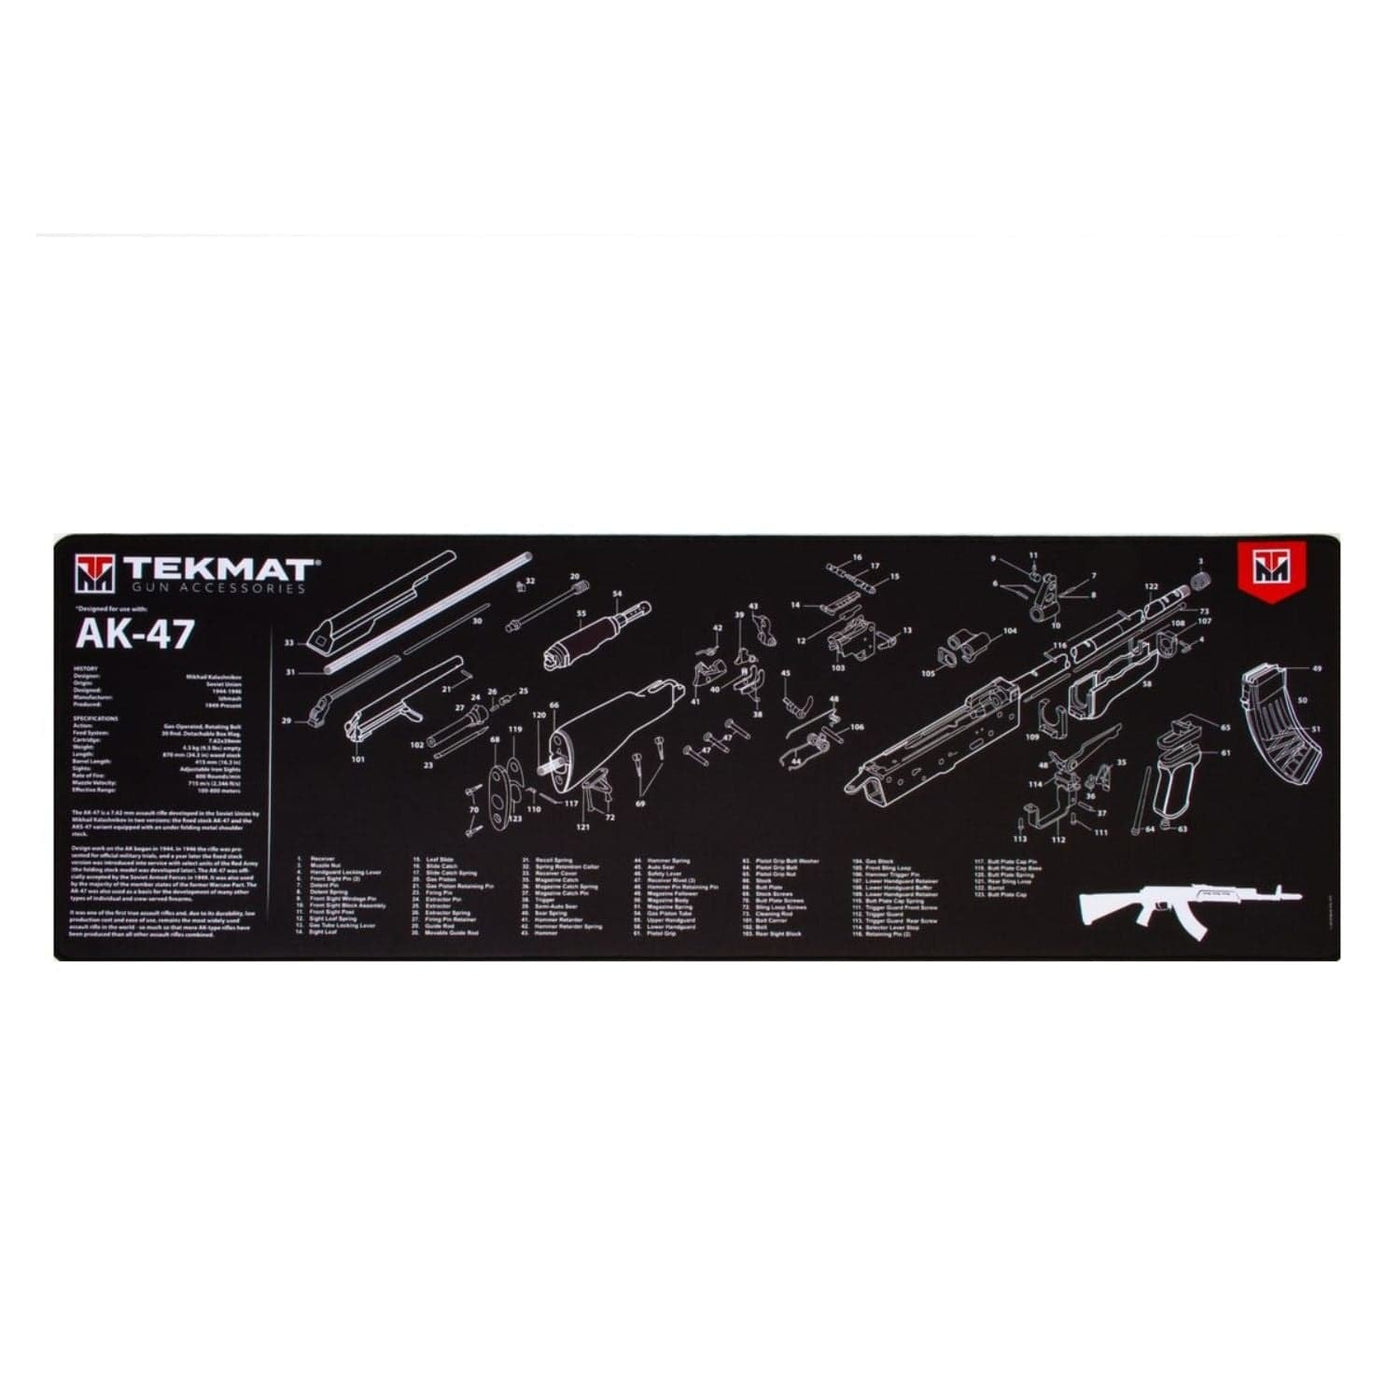 TekMat TekMat Ultra 44 AK47 Gun Cleaning Mat Shooting